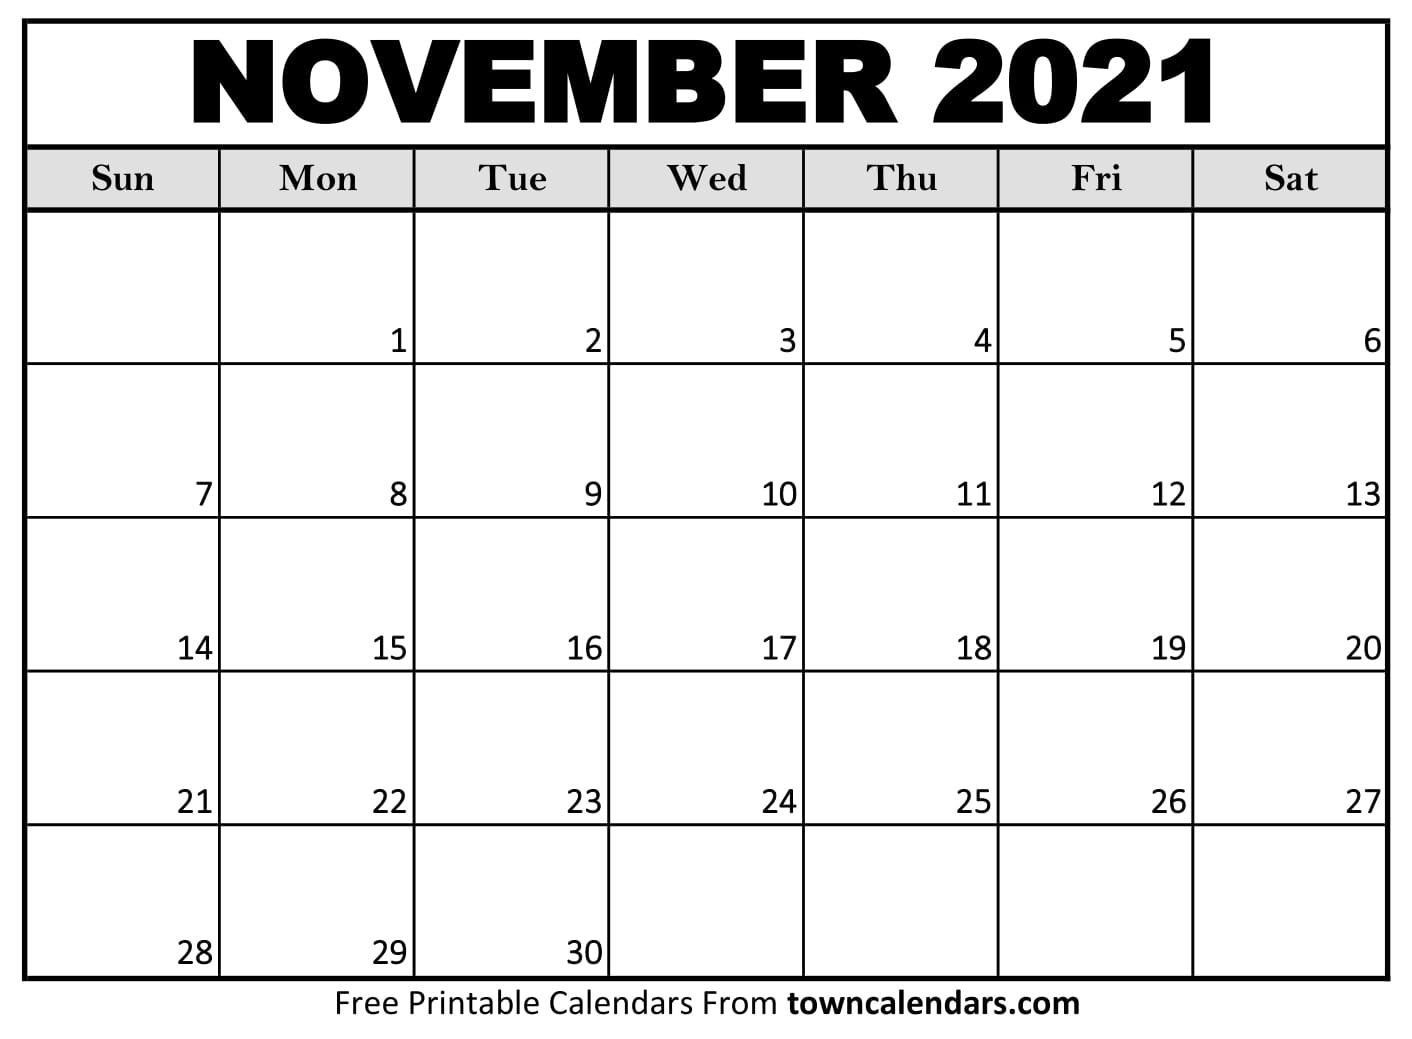 Printable November 2021 Calendar - Towncalendars Print November 2021 Calendar